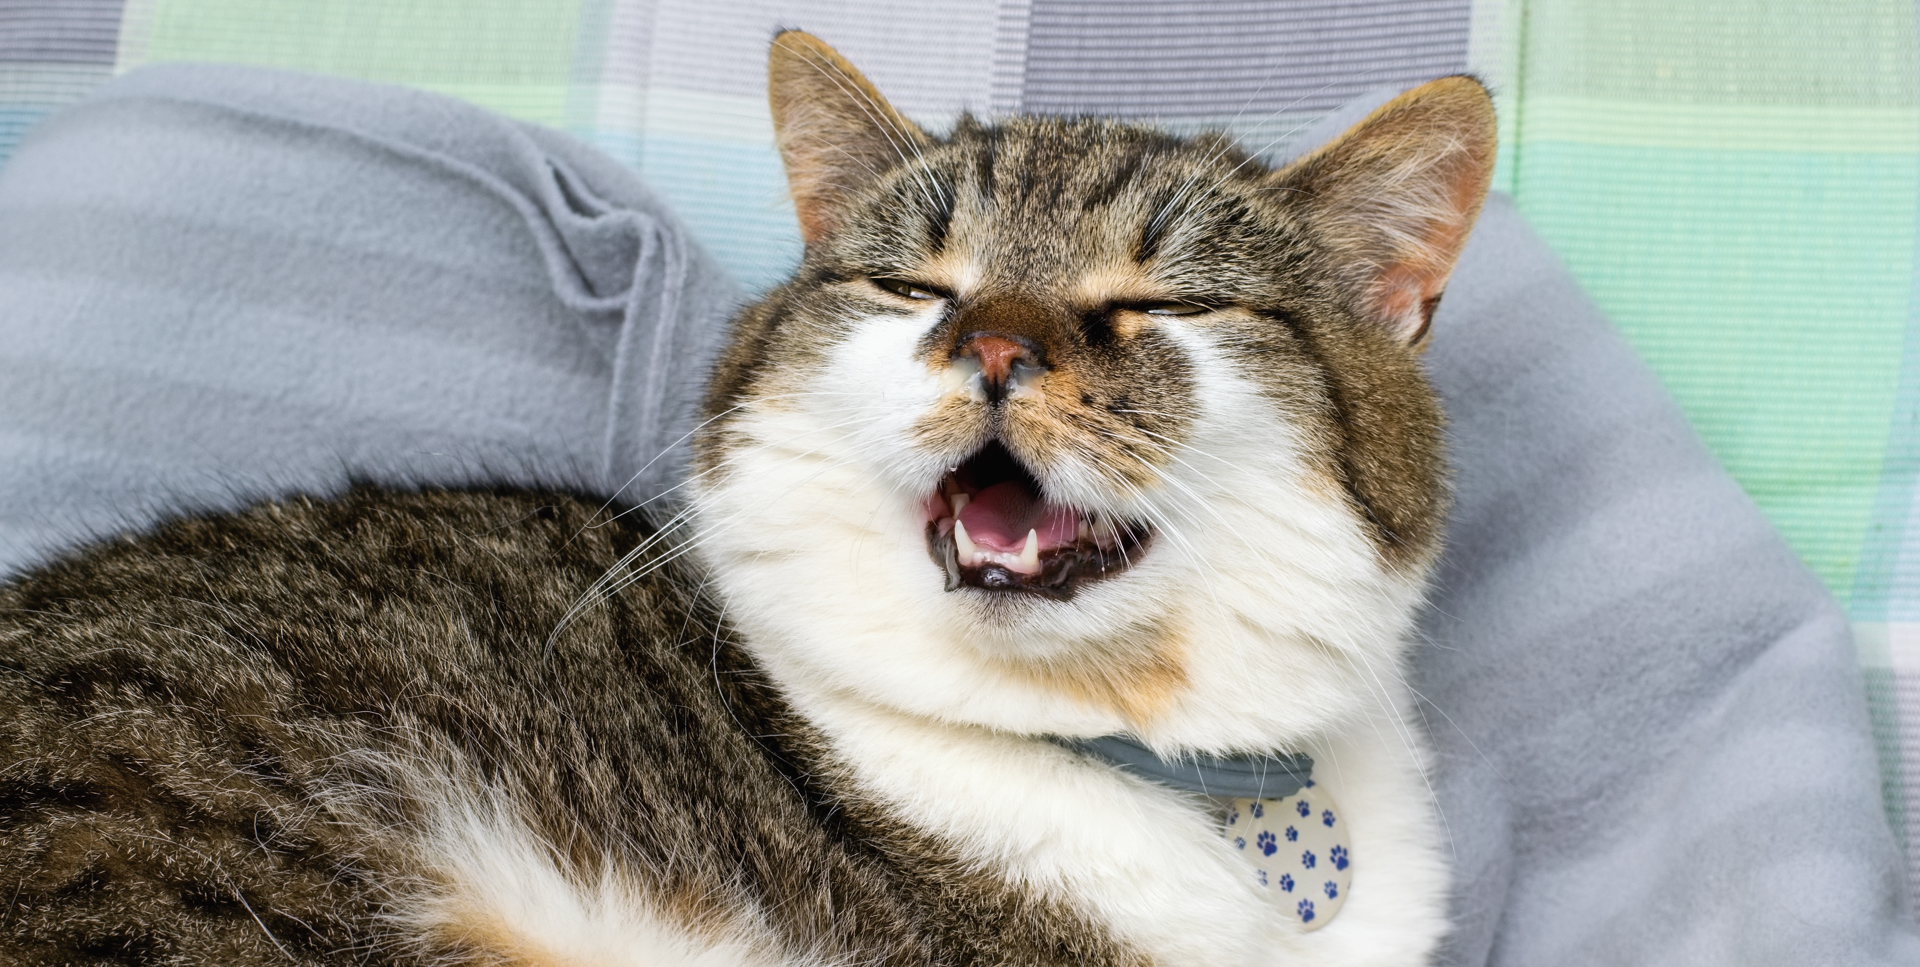 Cat Keeps Sneezing But Seems Fine